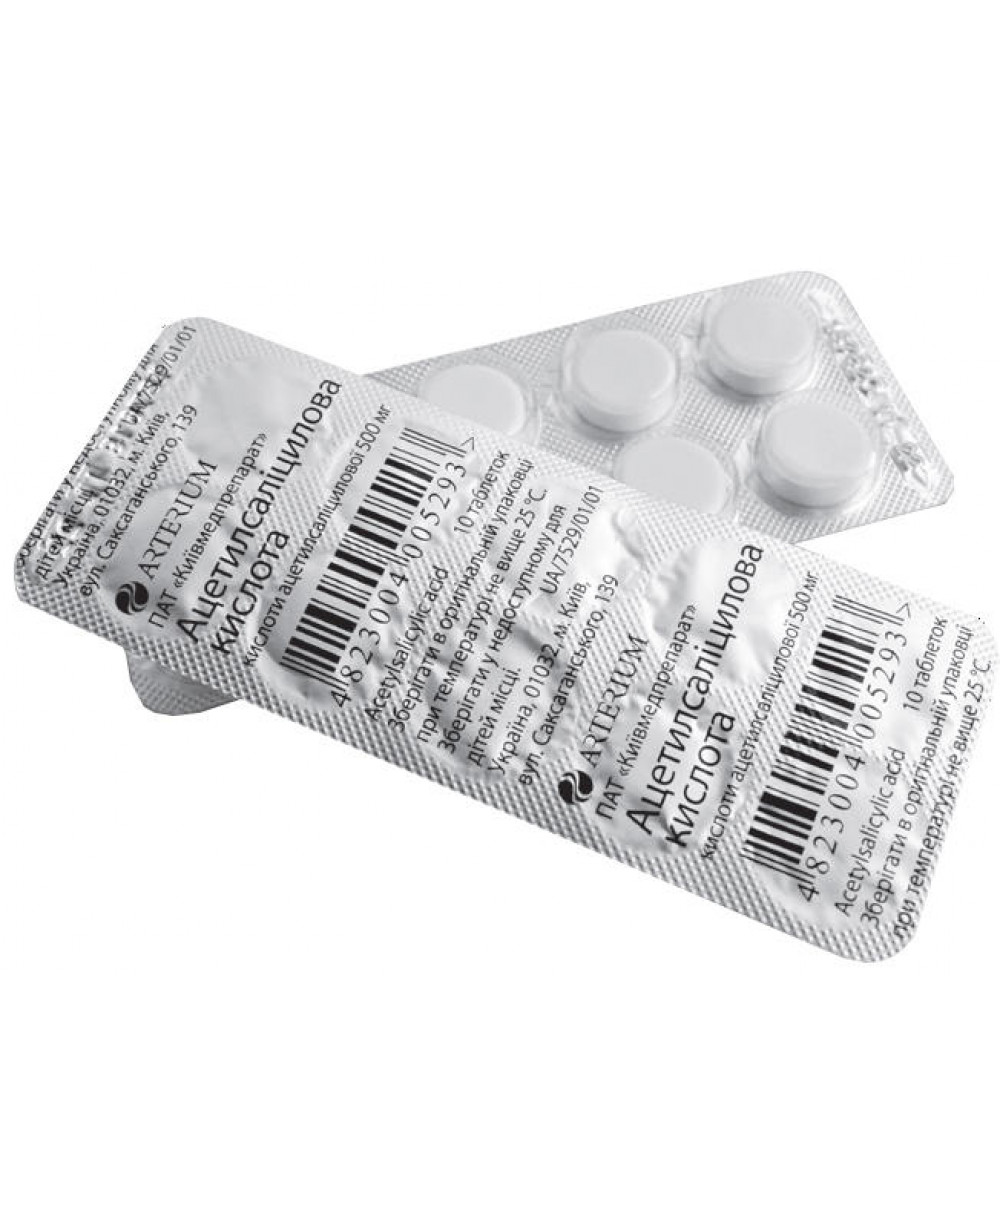 2744 БОЛ-РАН® НЕО - Paracetamol, combinations excl. psycholeptics